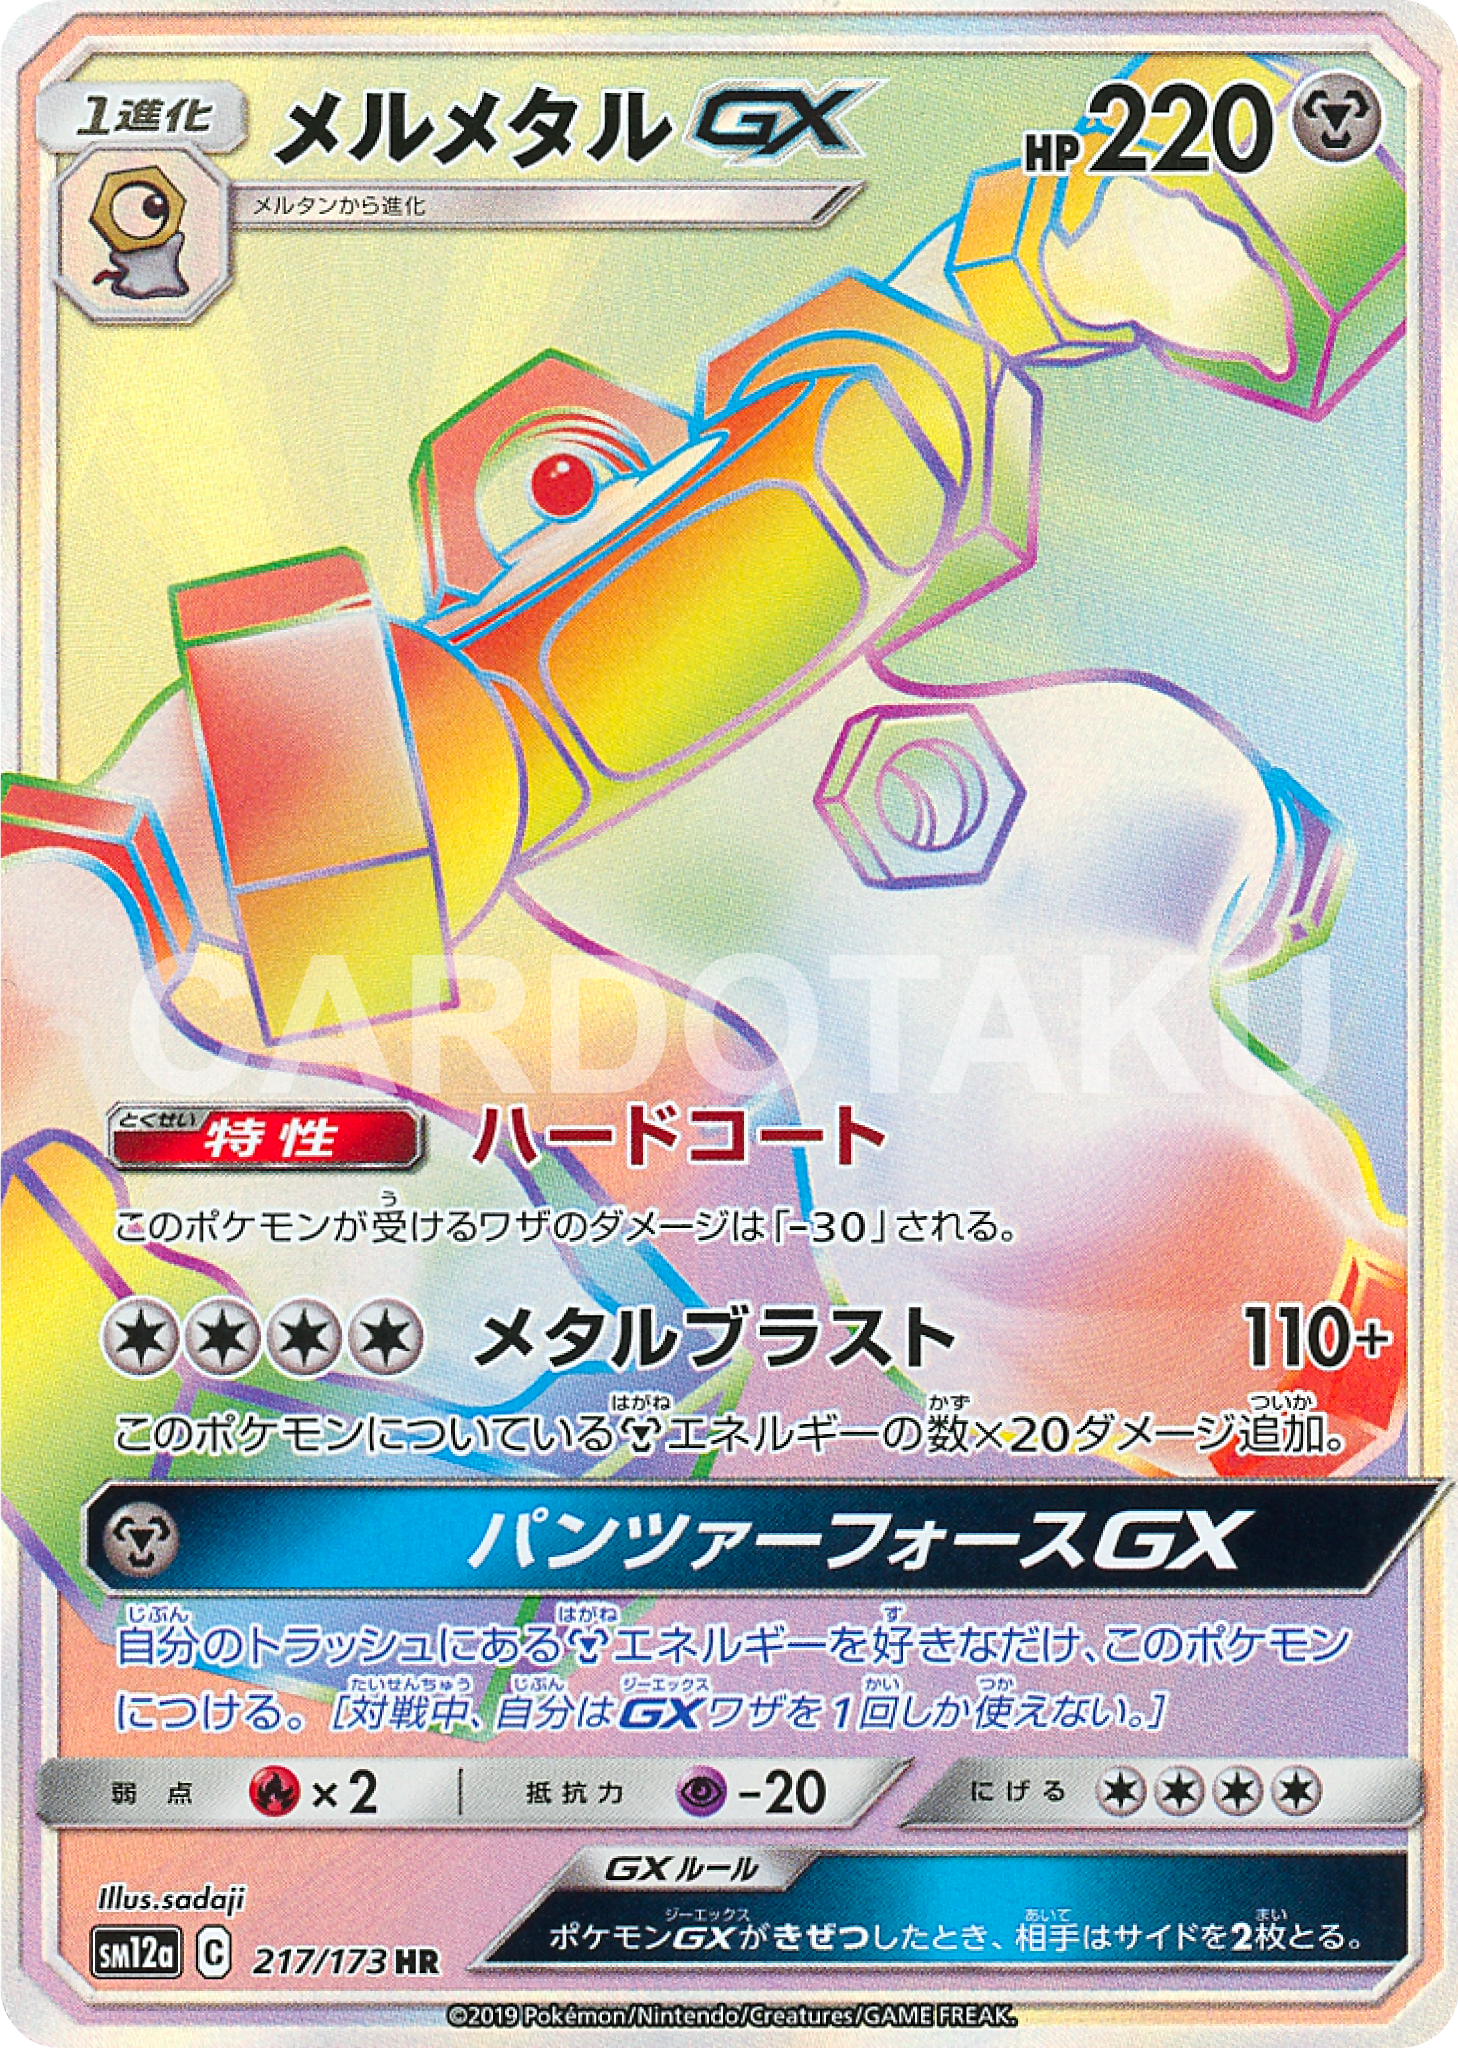 Pokémon Card Game SM12a 217/173